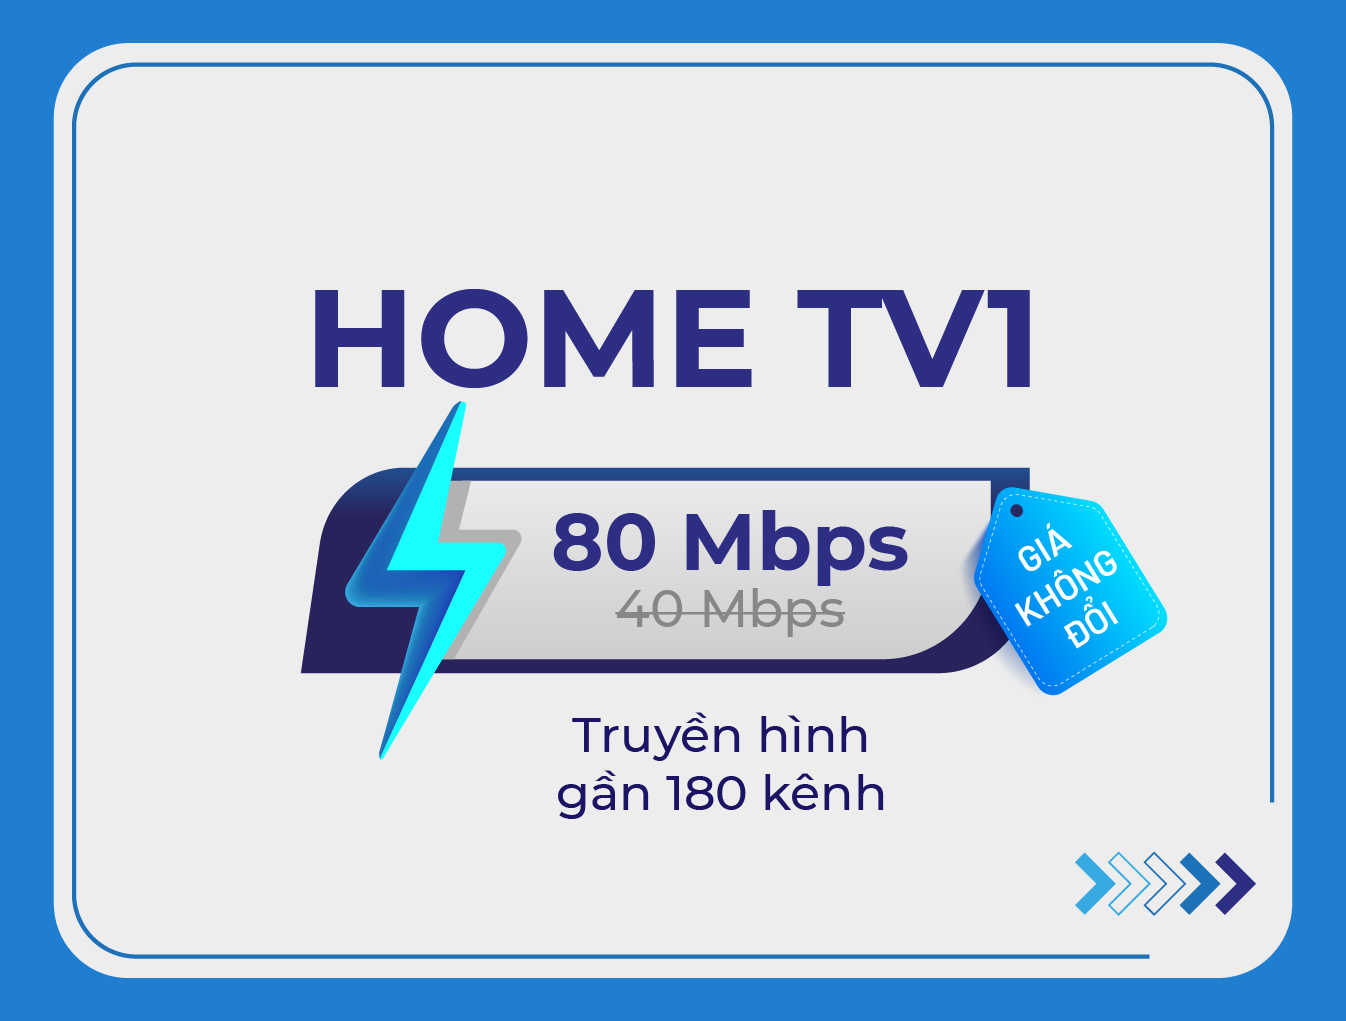 Home TV1